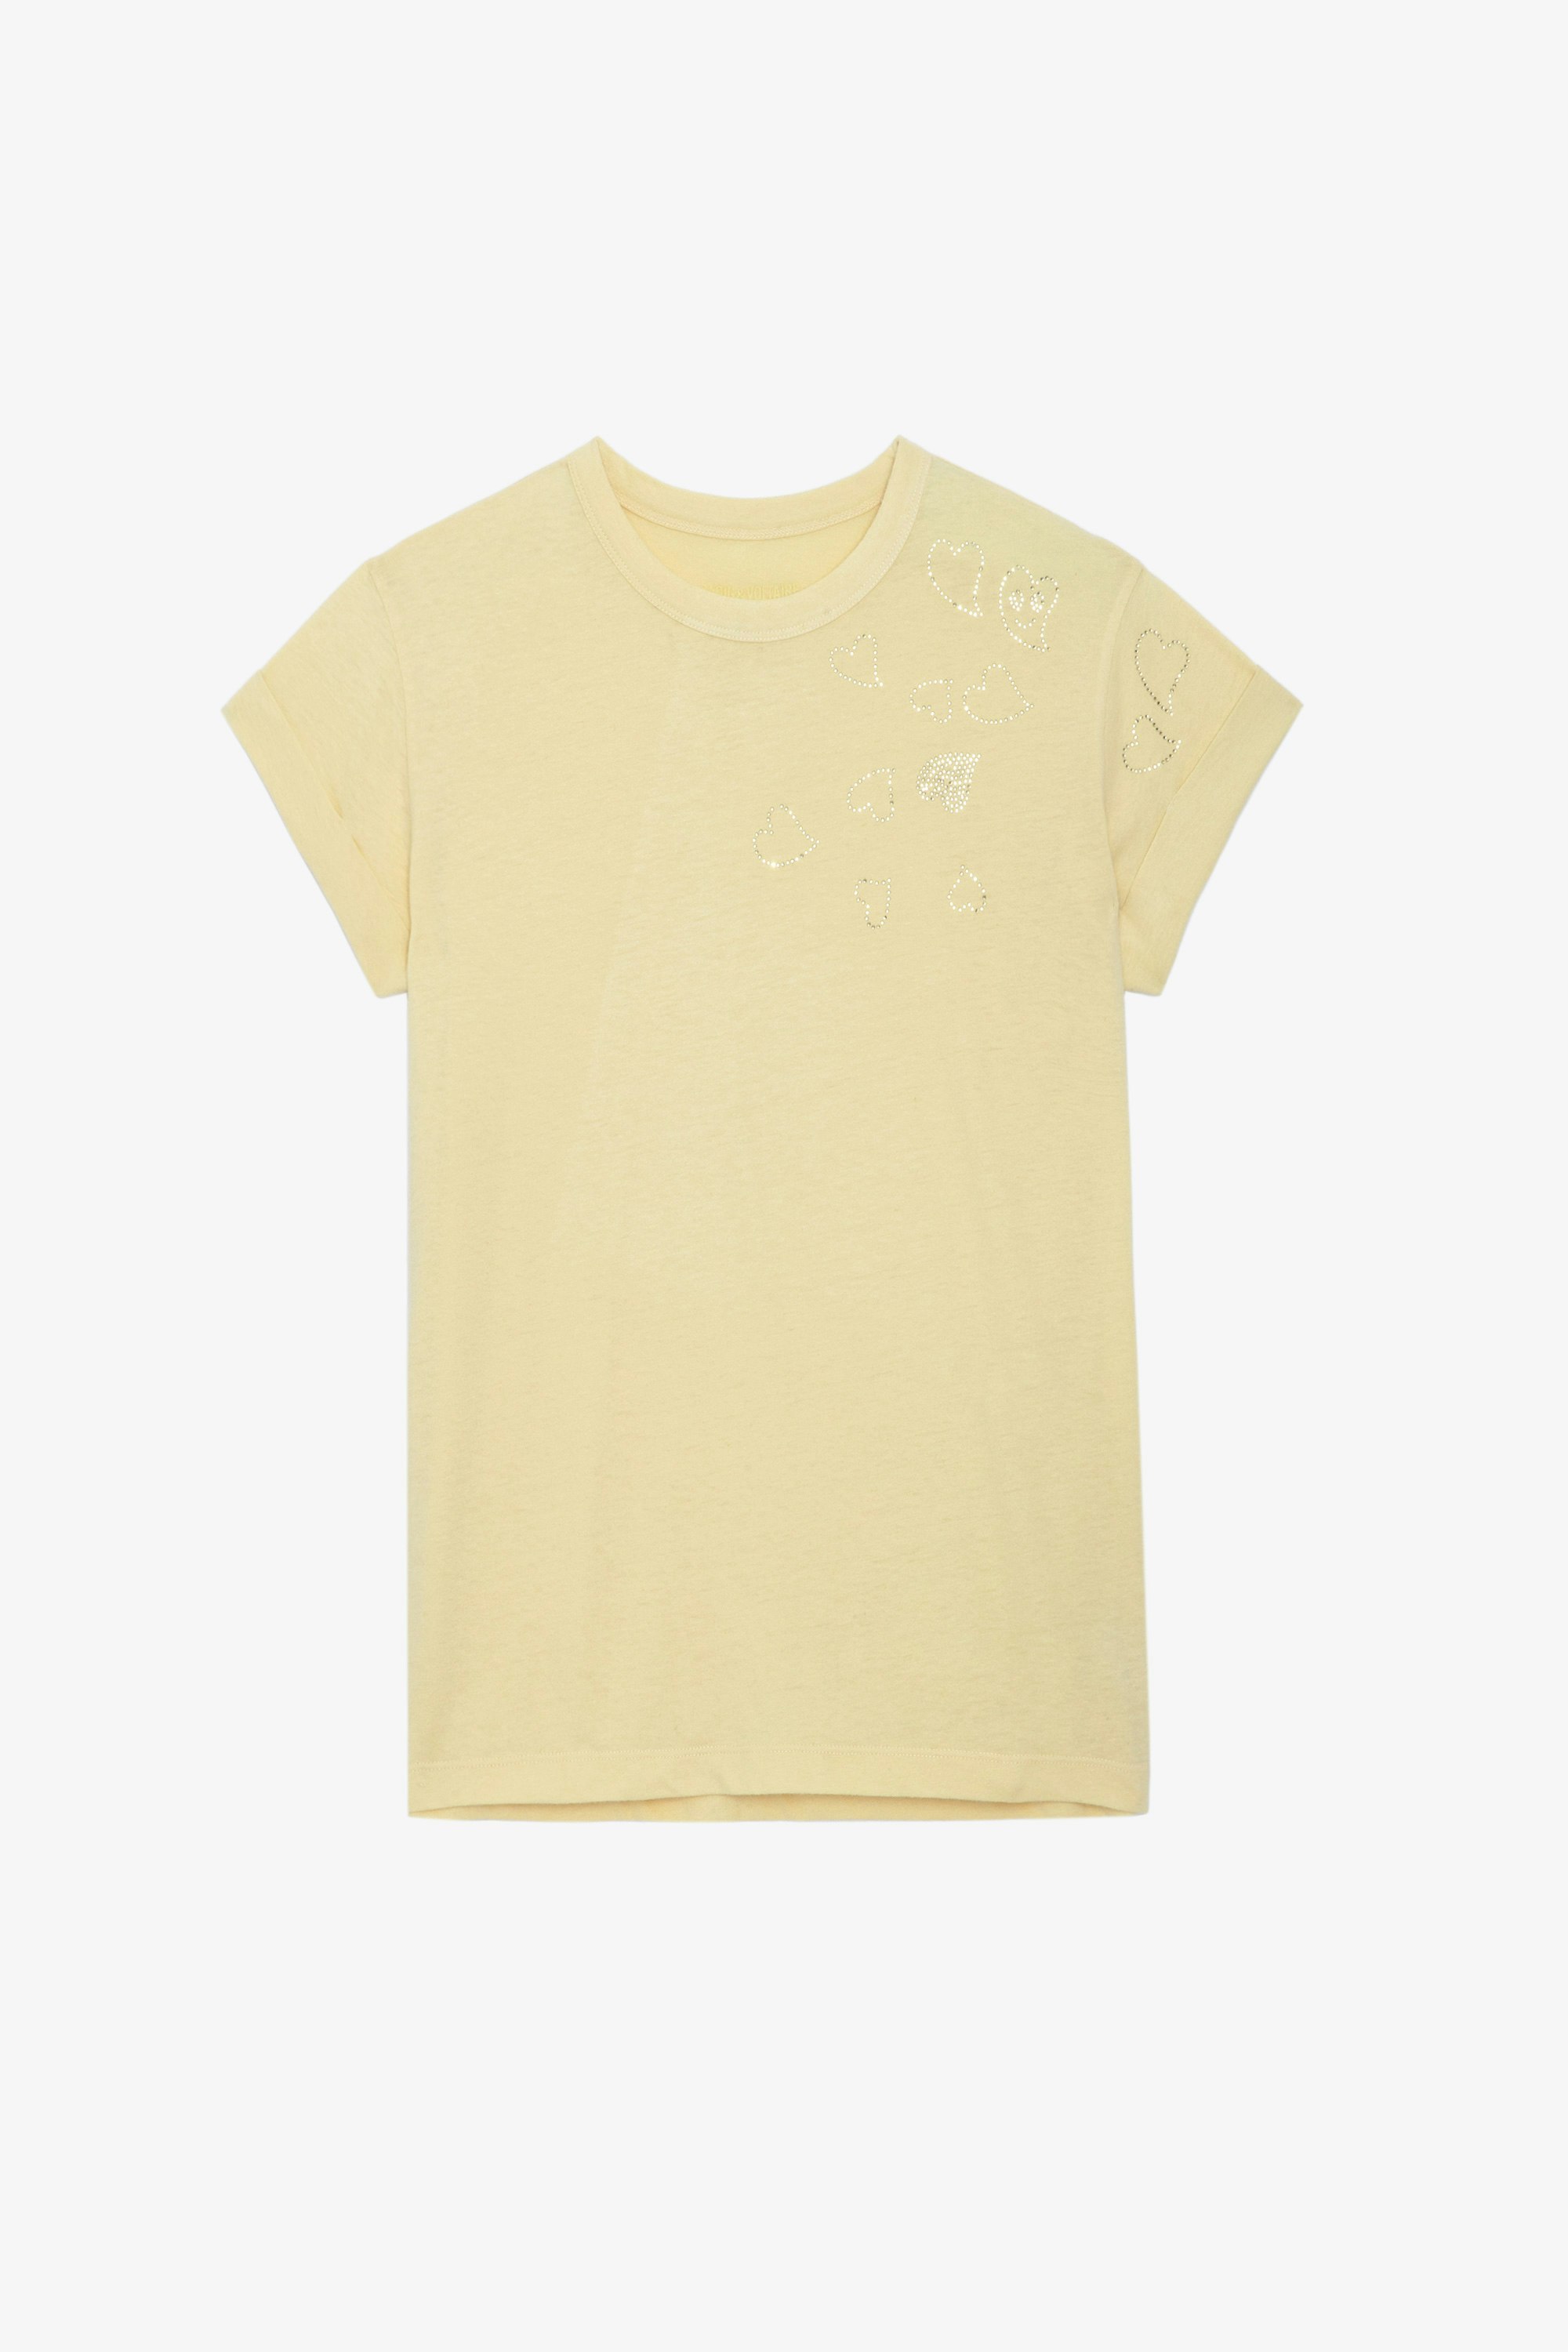 T-shirt Anya Strass - T-shirt jaune clair à col rond, manches courtes et strass cœurs.